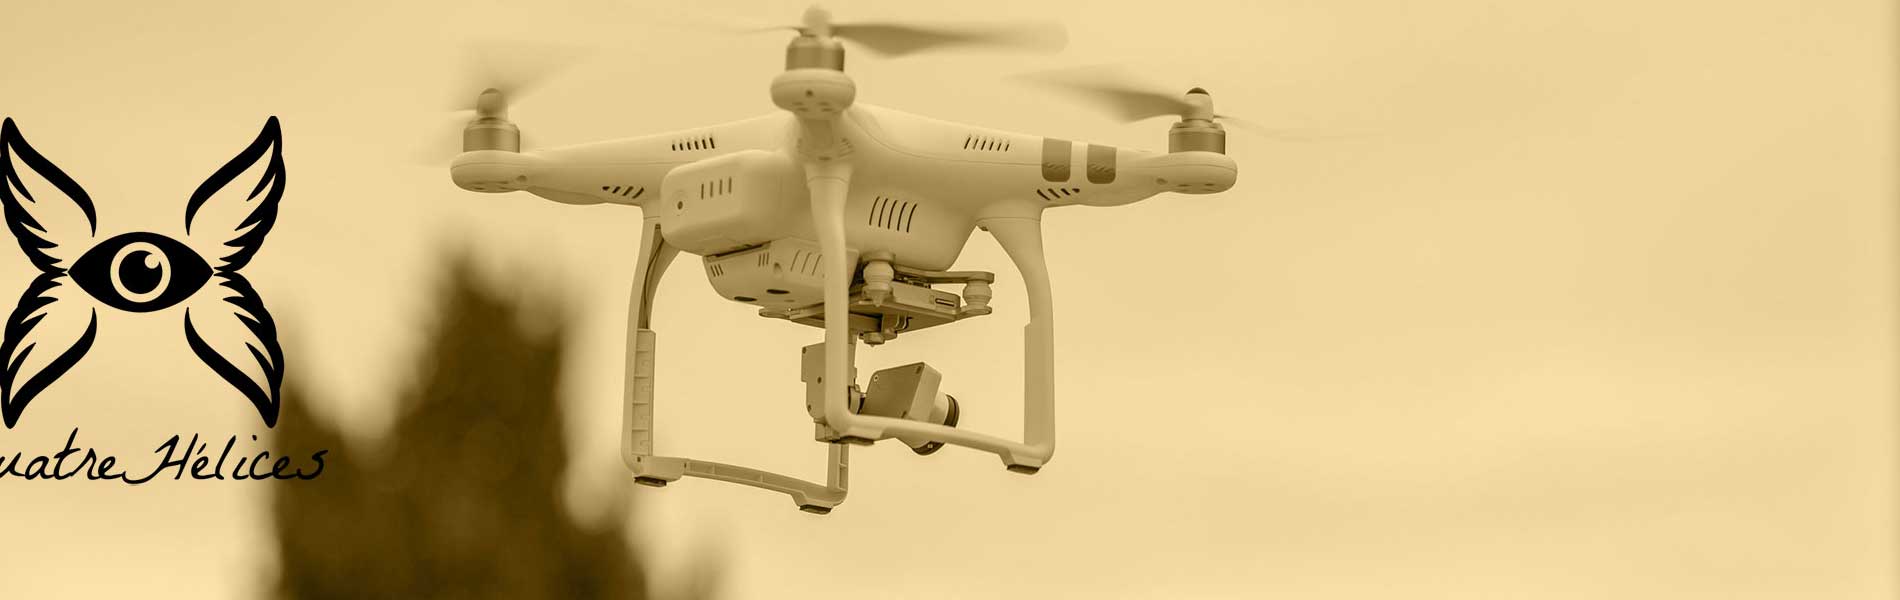 Photos aérienne drone